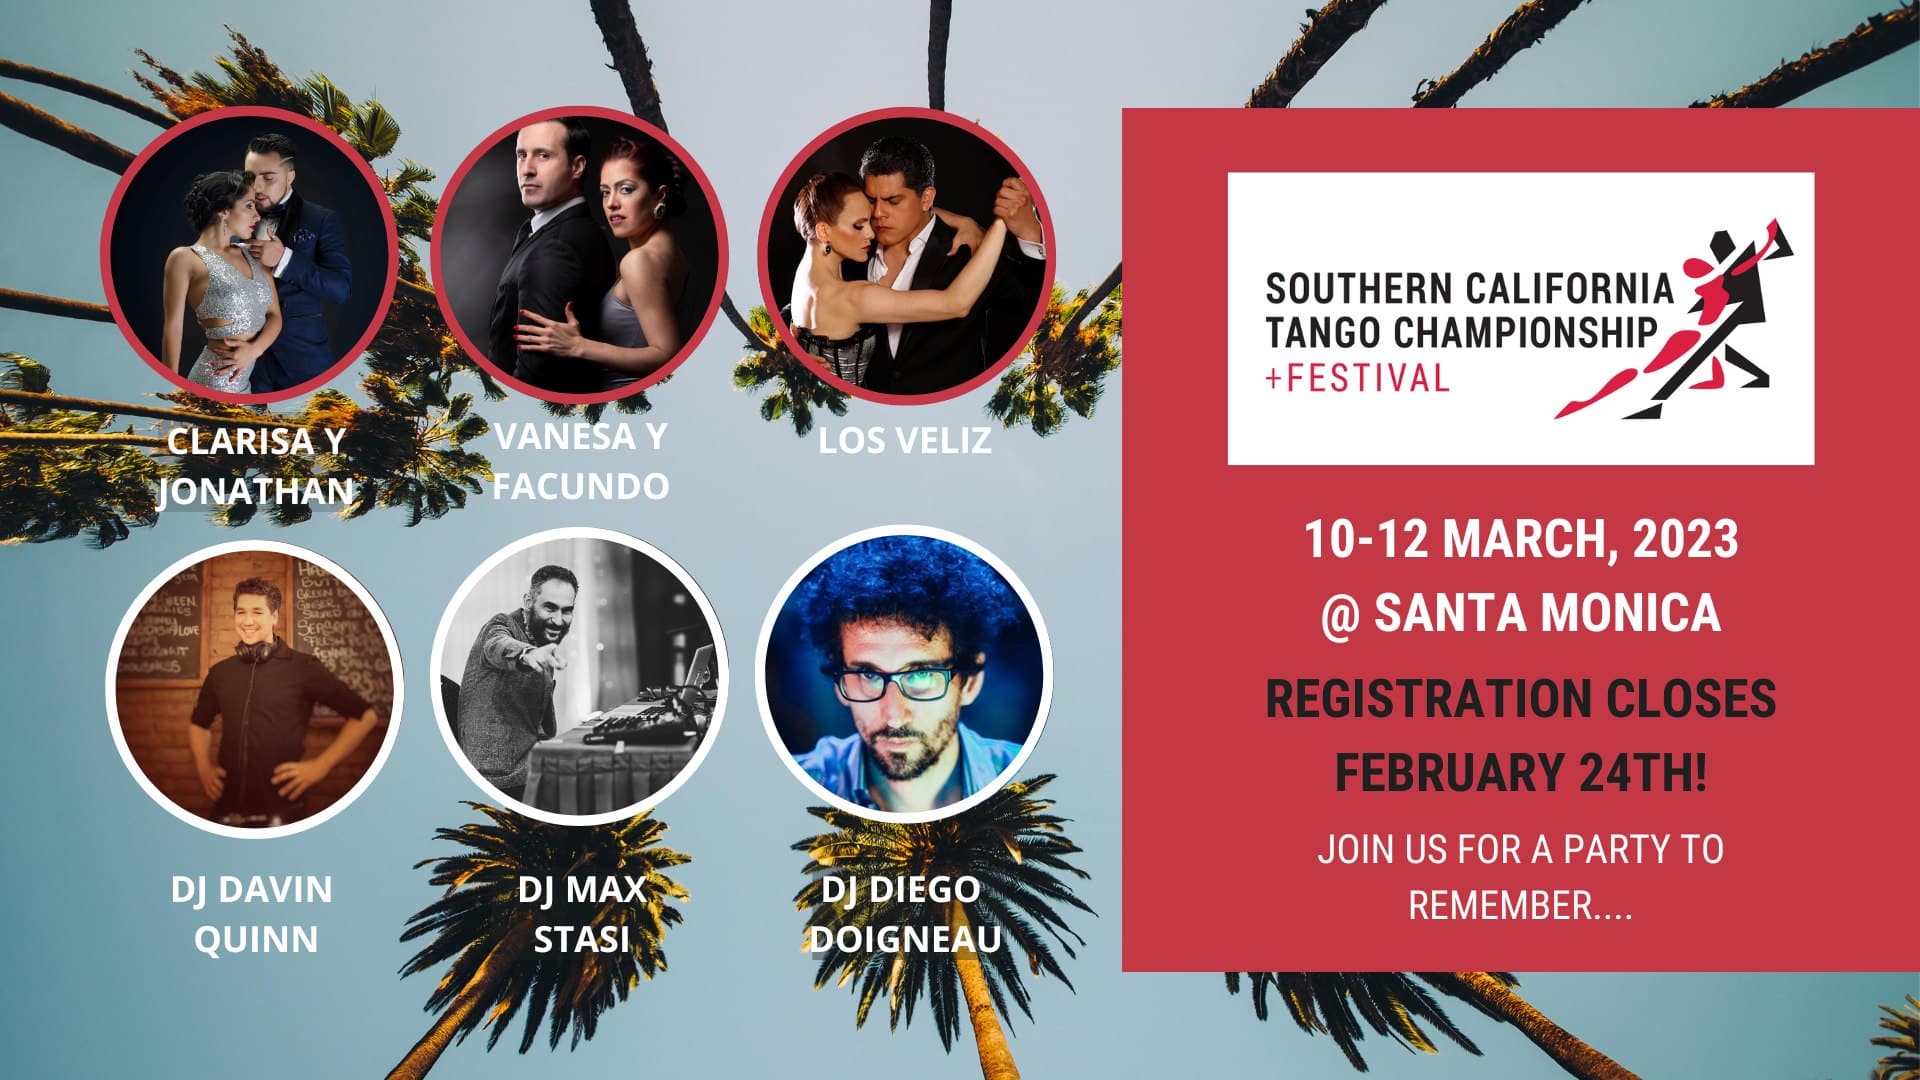 Southern California Tango Championship & Festival 2023 preview picture